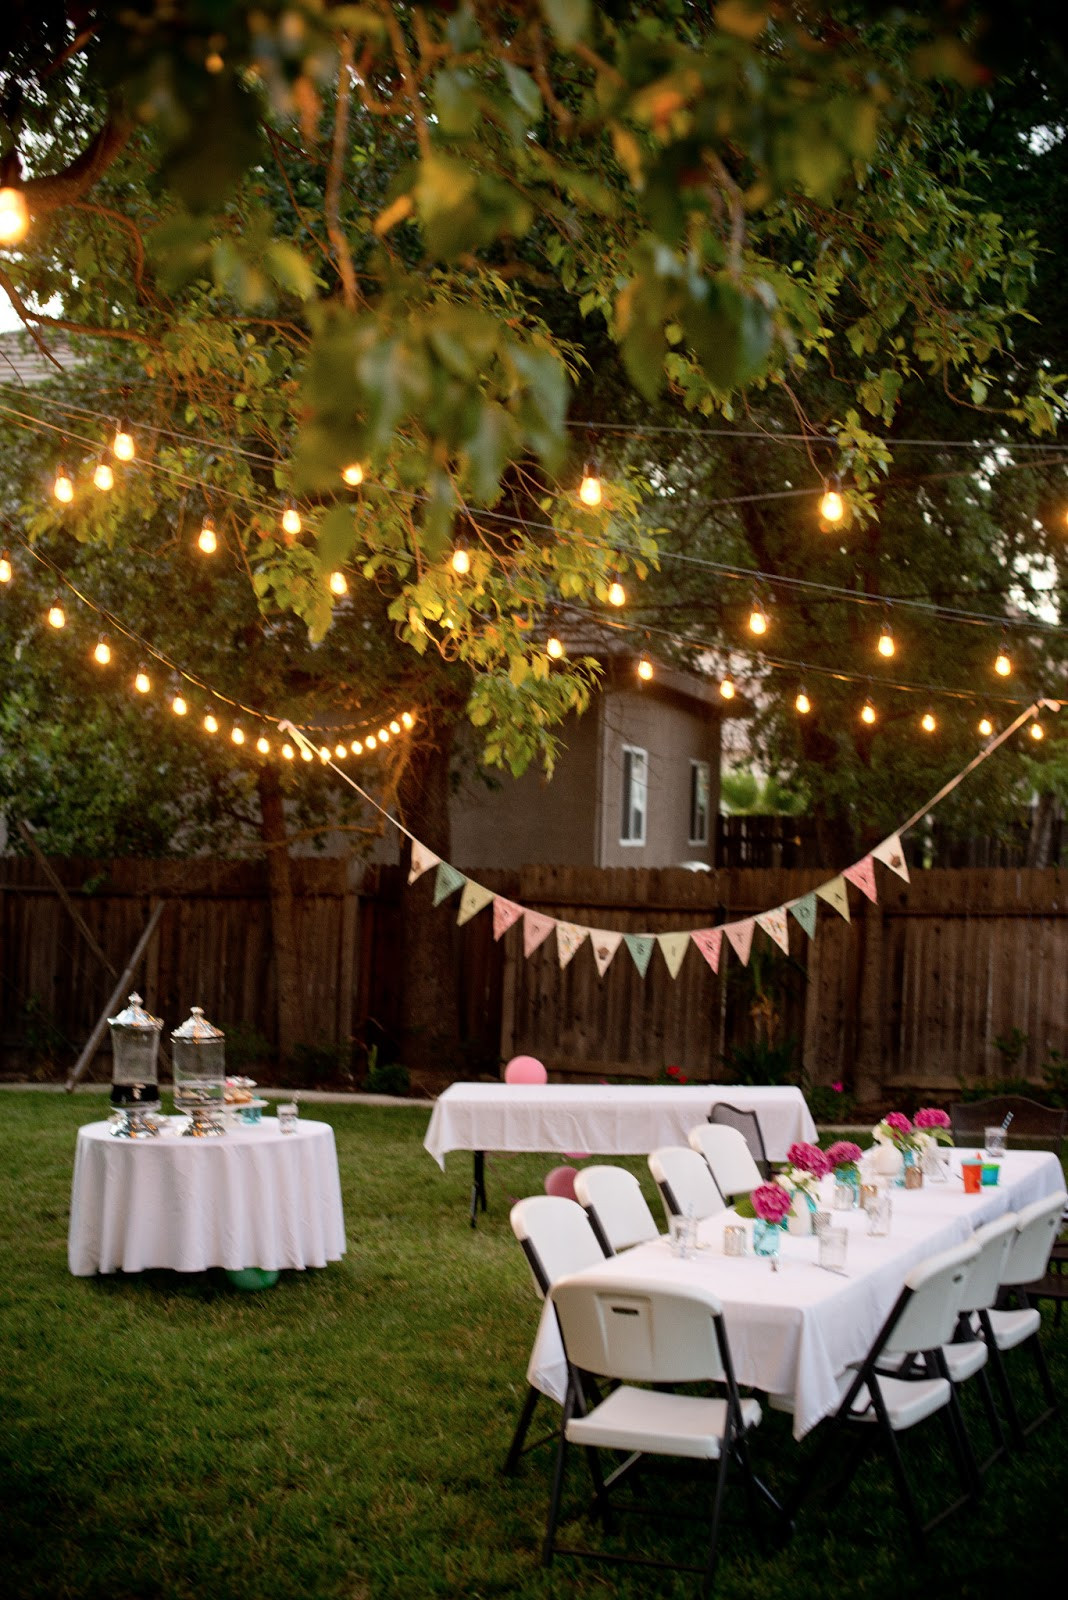 Ideas For A Backyard Engagement Party
 Domestic Fashionista Backyard Birthday Fun Pink